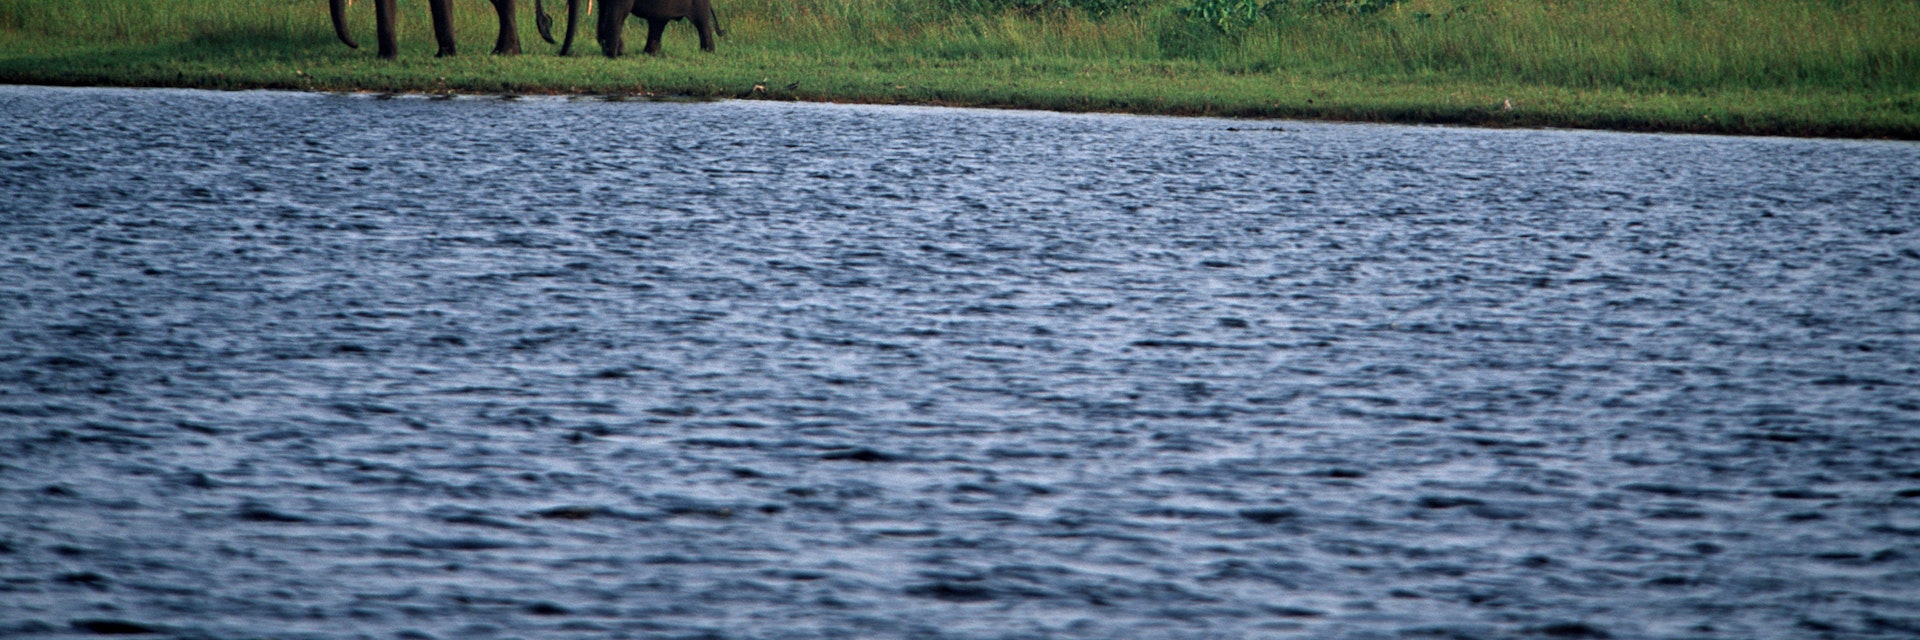 Loango National Park, Gabon. Forest elephants (Loxodonta africana cyclotis) on the beach. Atlantic Ocean in background, lagoon in foreground.